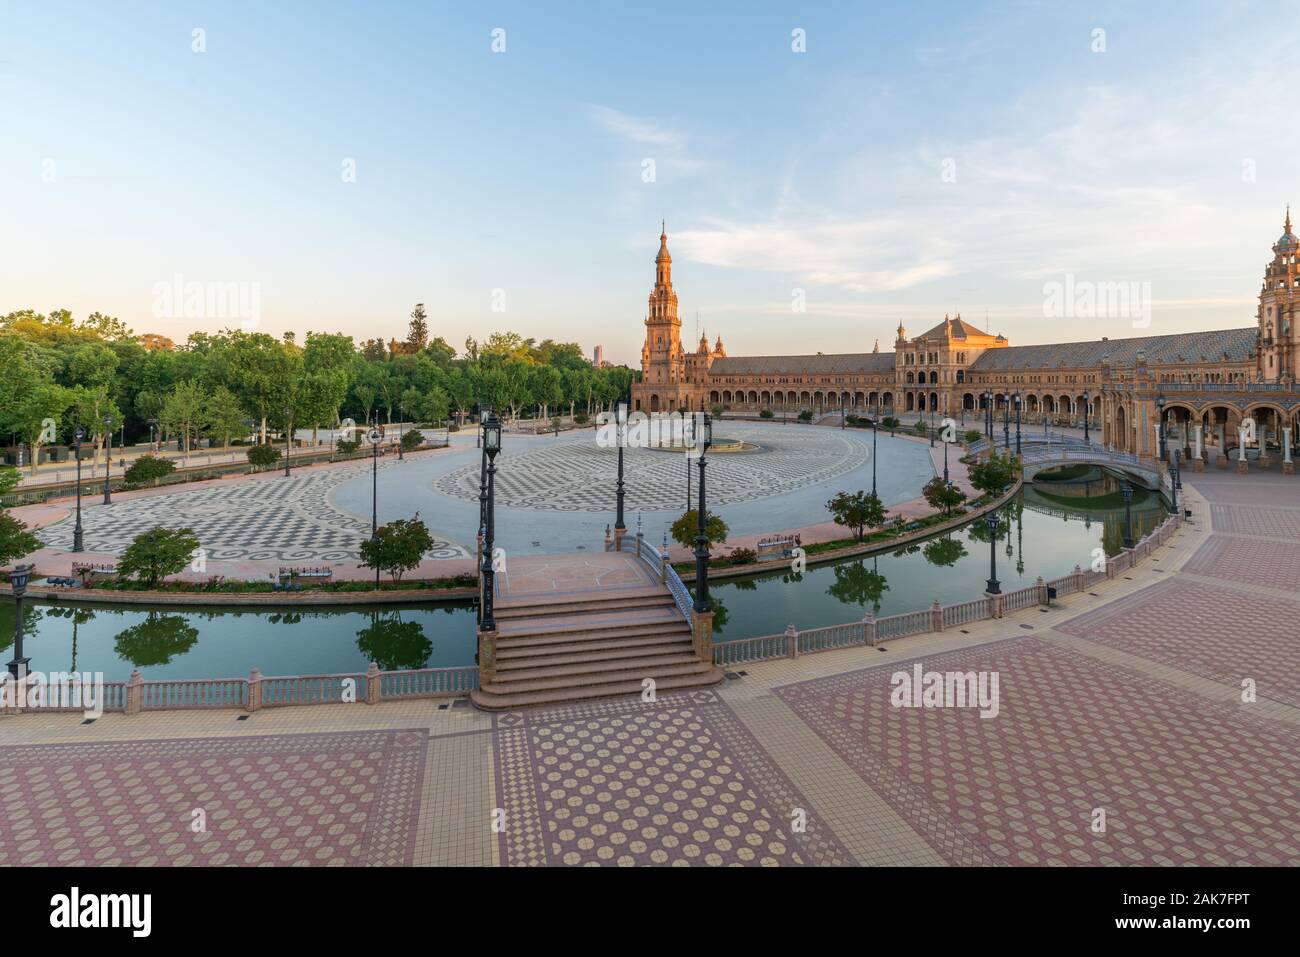 Landscape in the Plaza de Espana, Beautiful Spain Square in Seville at dusk Stock Photo